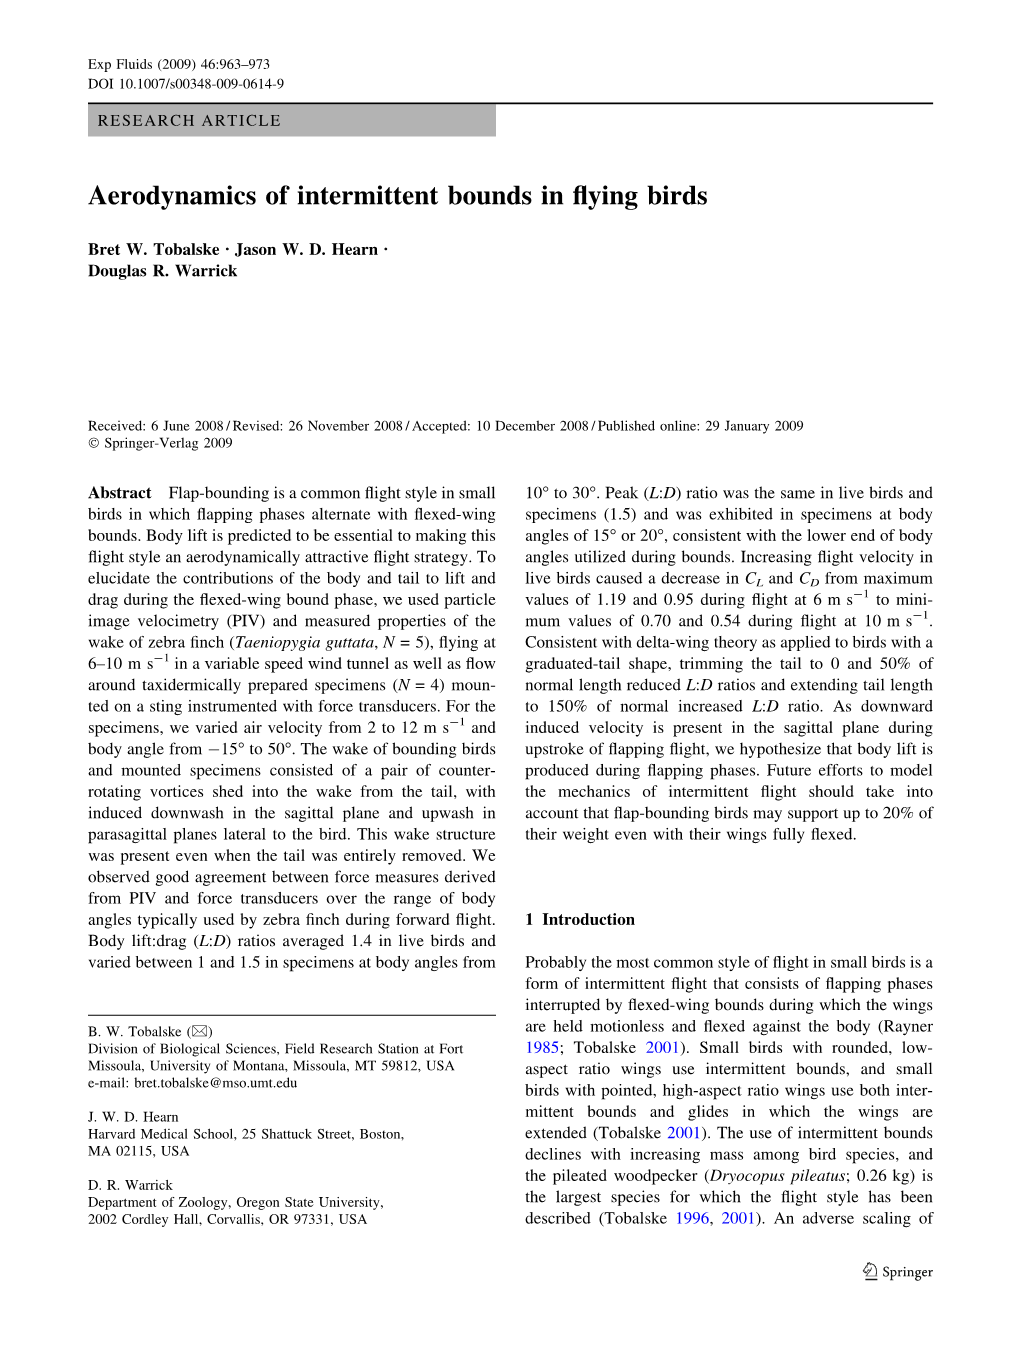 Aerodynamics of Intermittent Bounds in Flying Birds